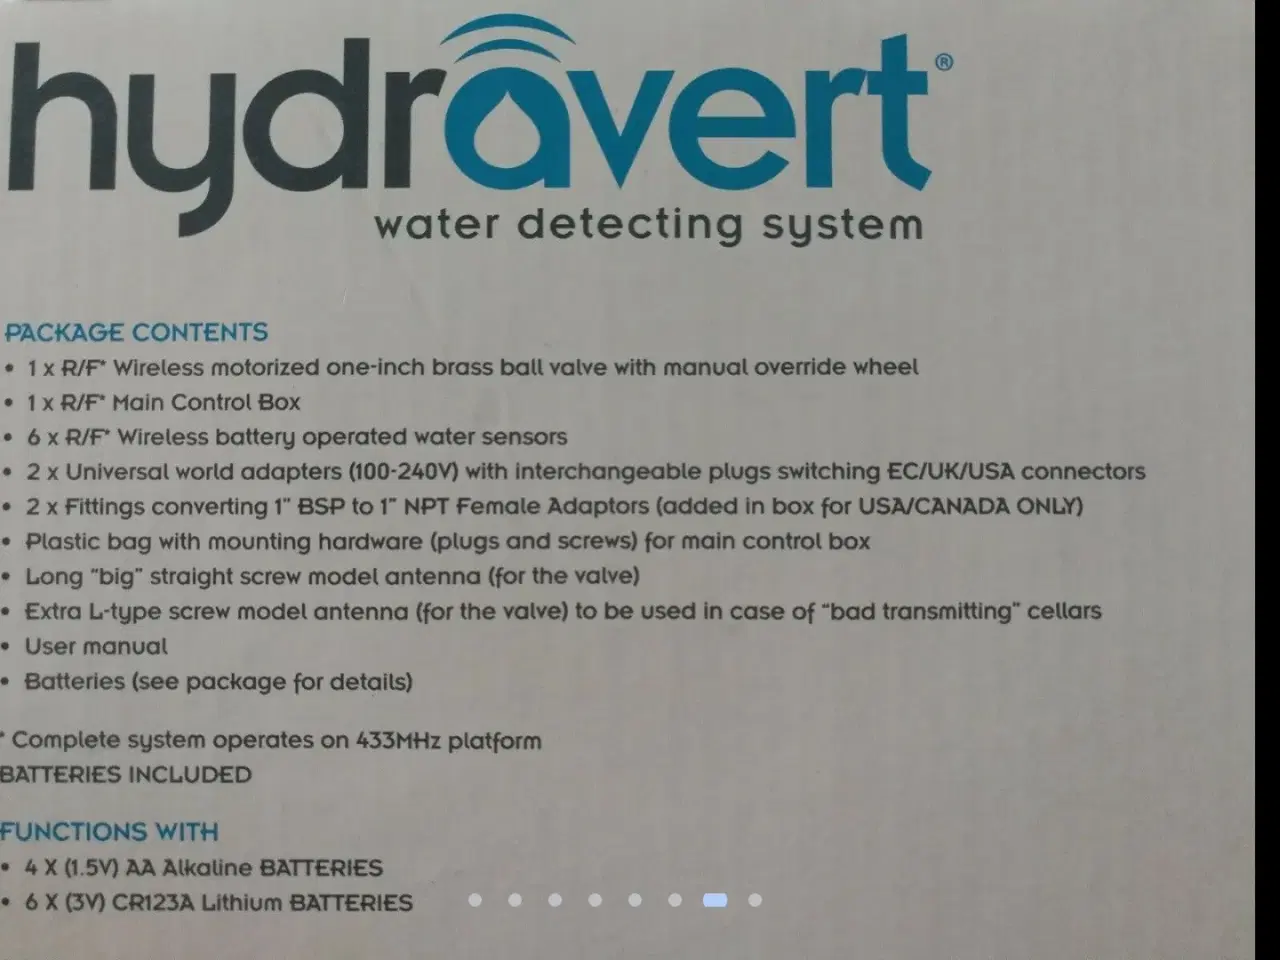 Billede 2 - Water detecting system, Hydravert - Water detectin